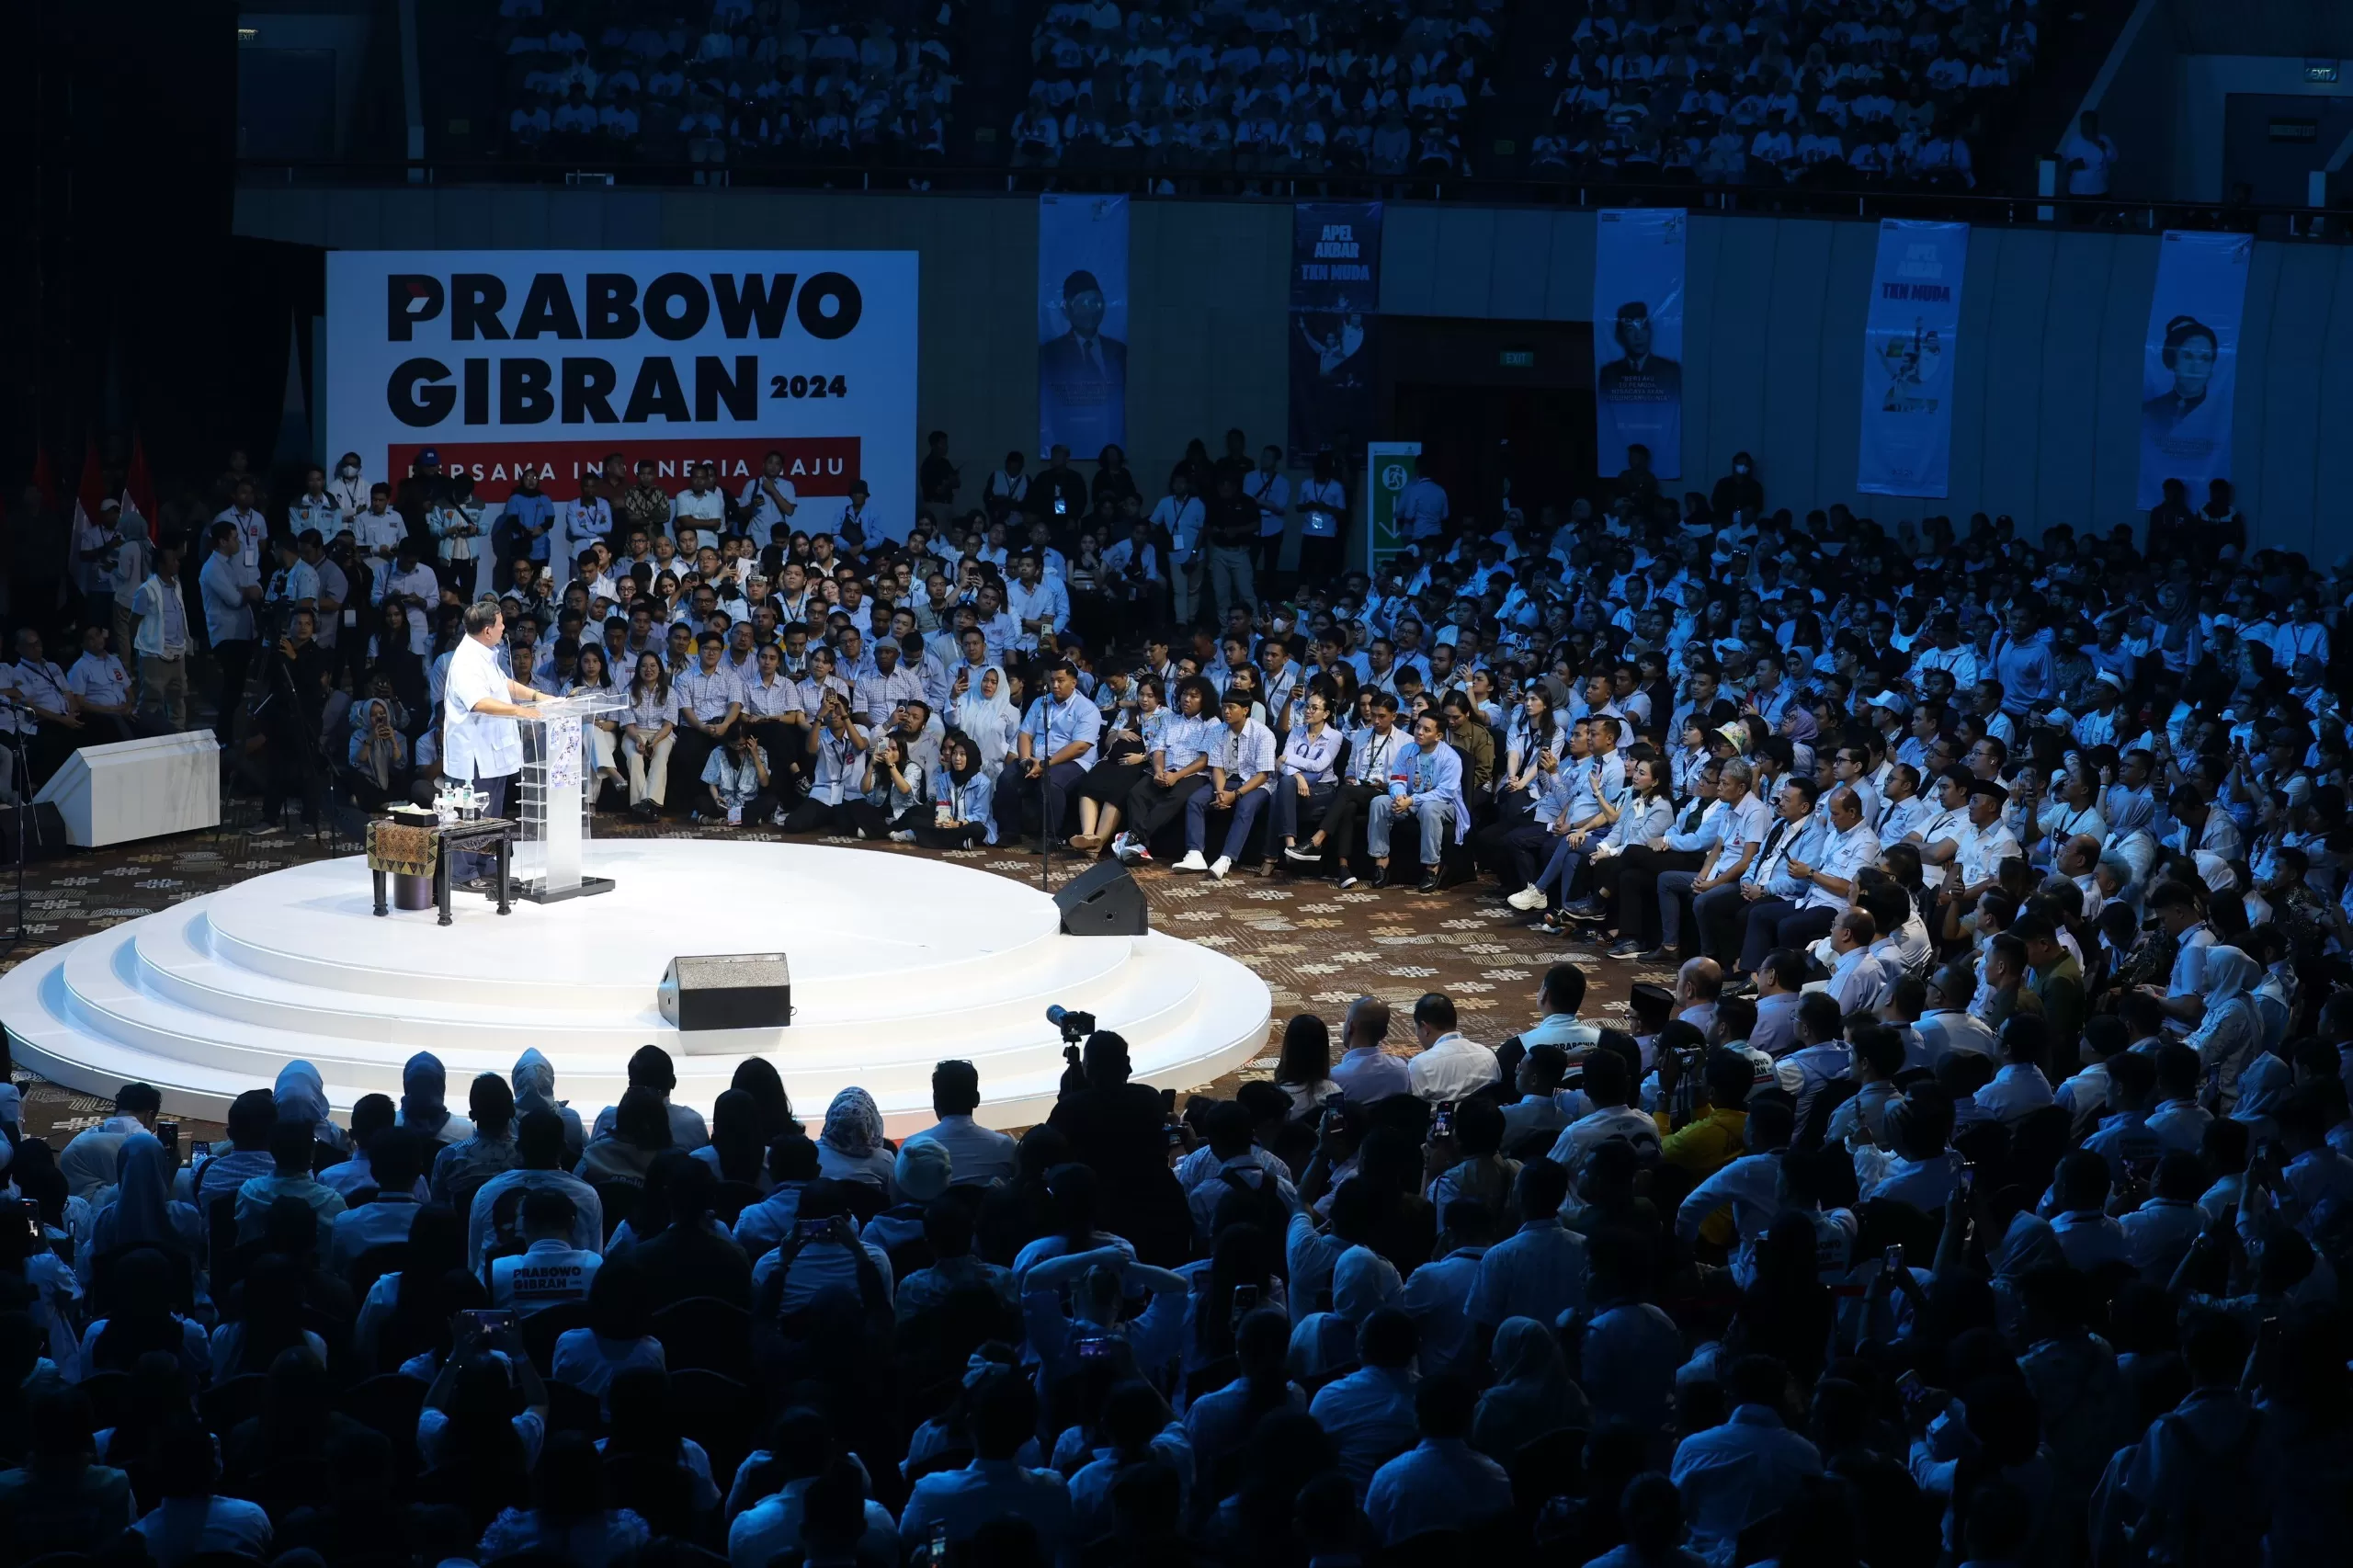 Prabowo Subianto: Kalau Saya Bersama Anak Muda, Saya Tidak Takut